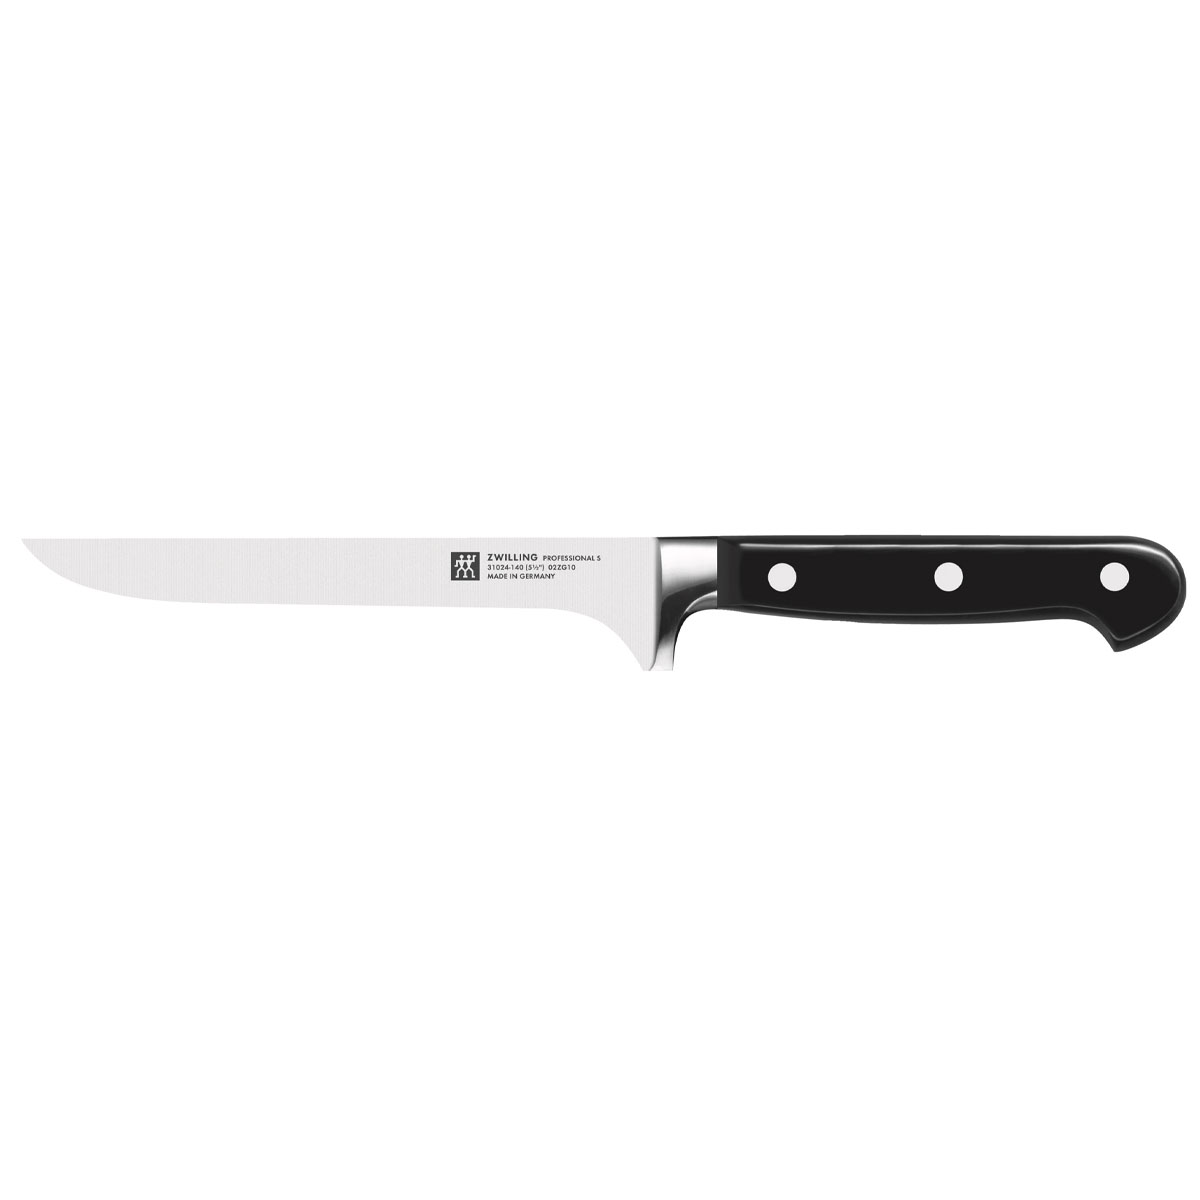 Нож филейный Zwilling Professional S, лезвие 14см Zwilling 31024-141, цвет серебристый